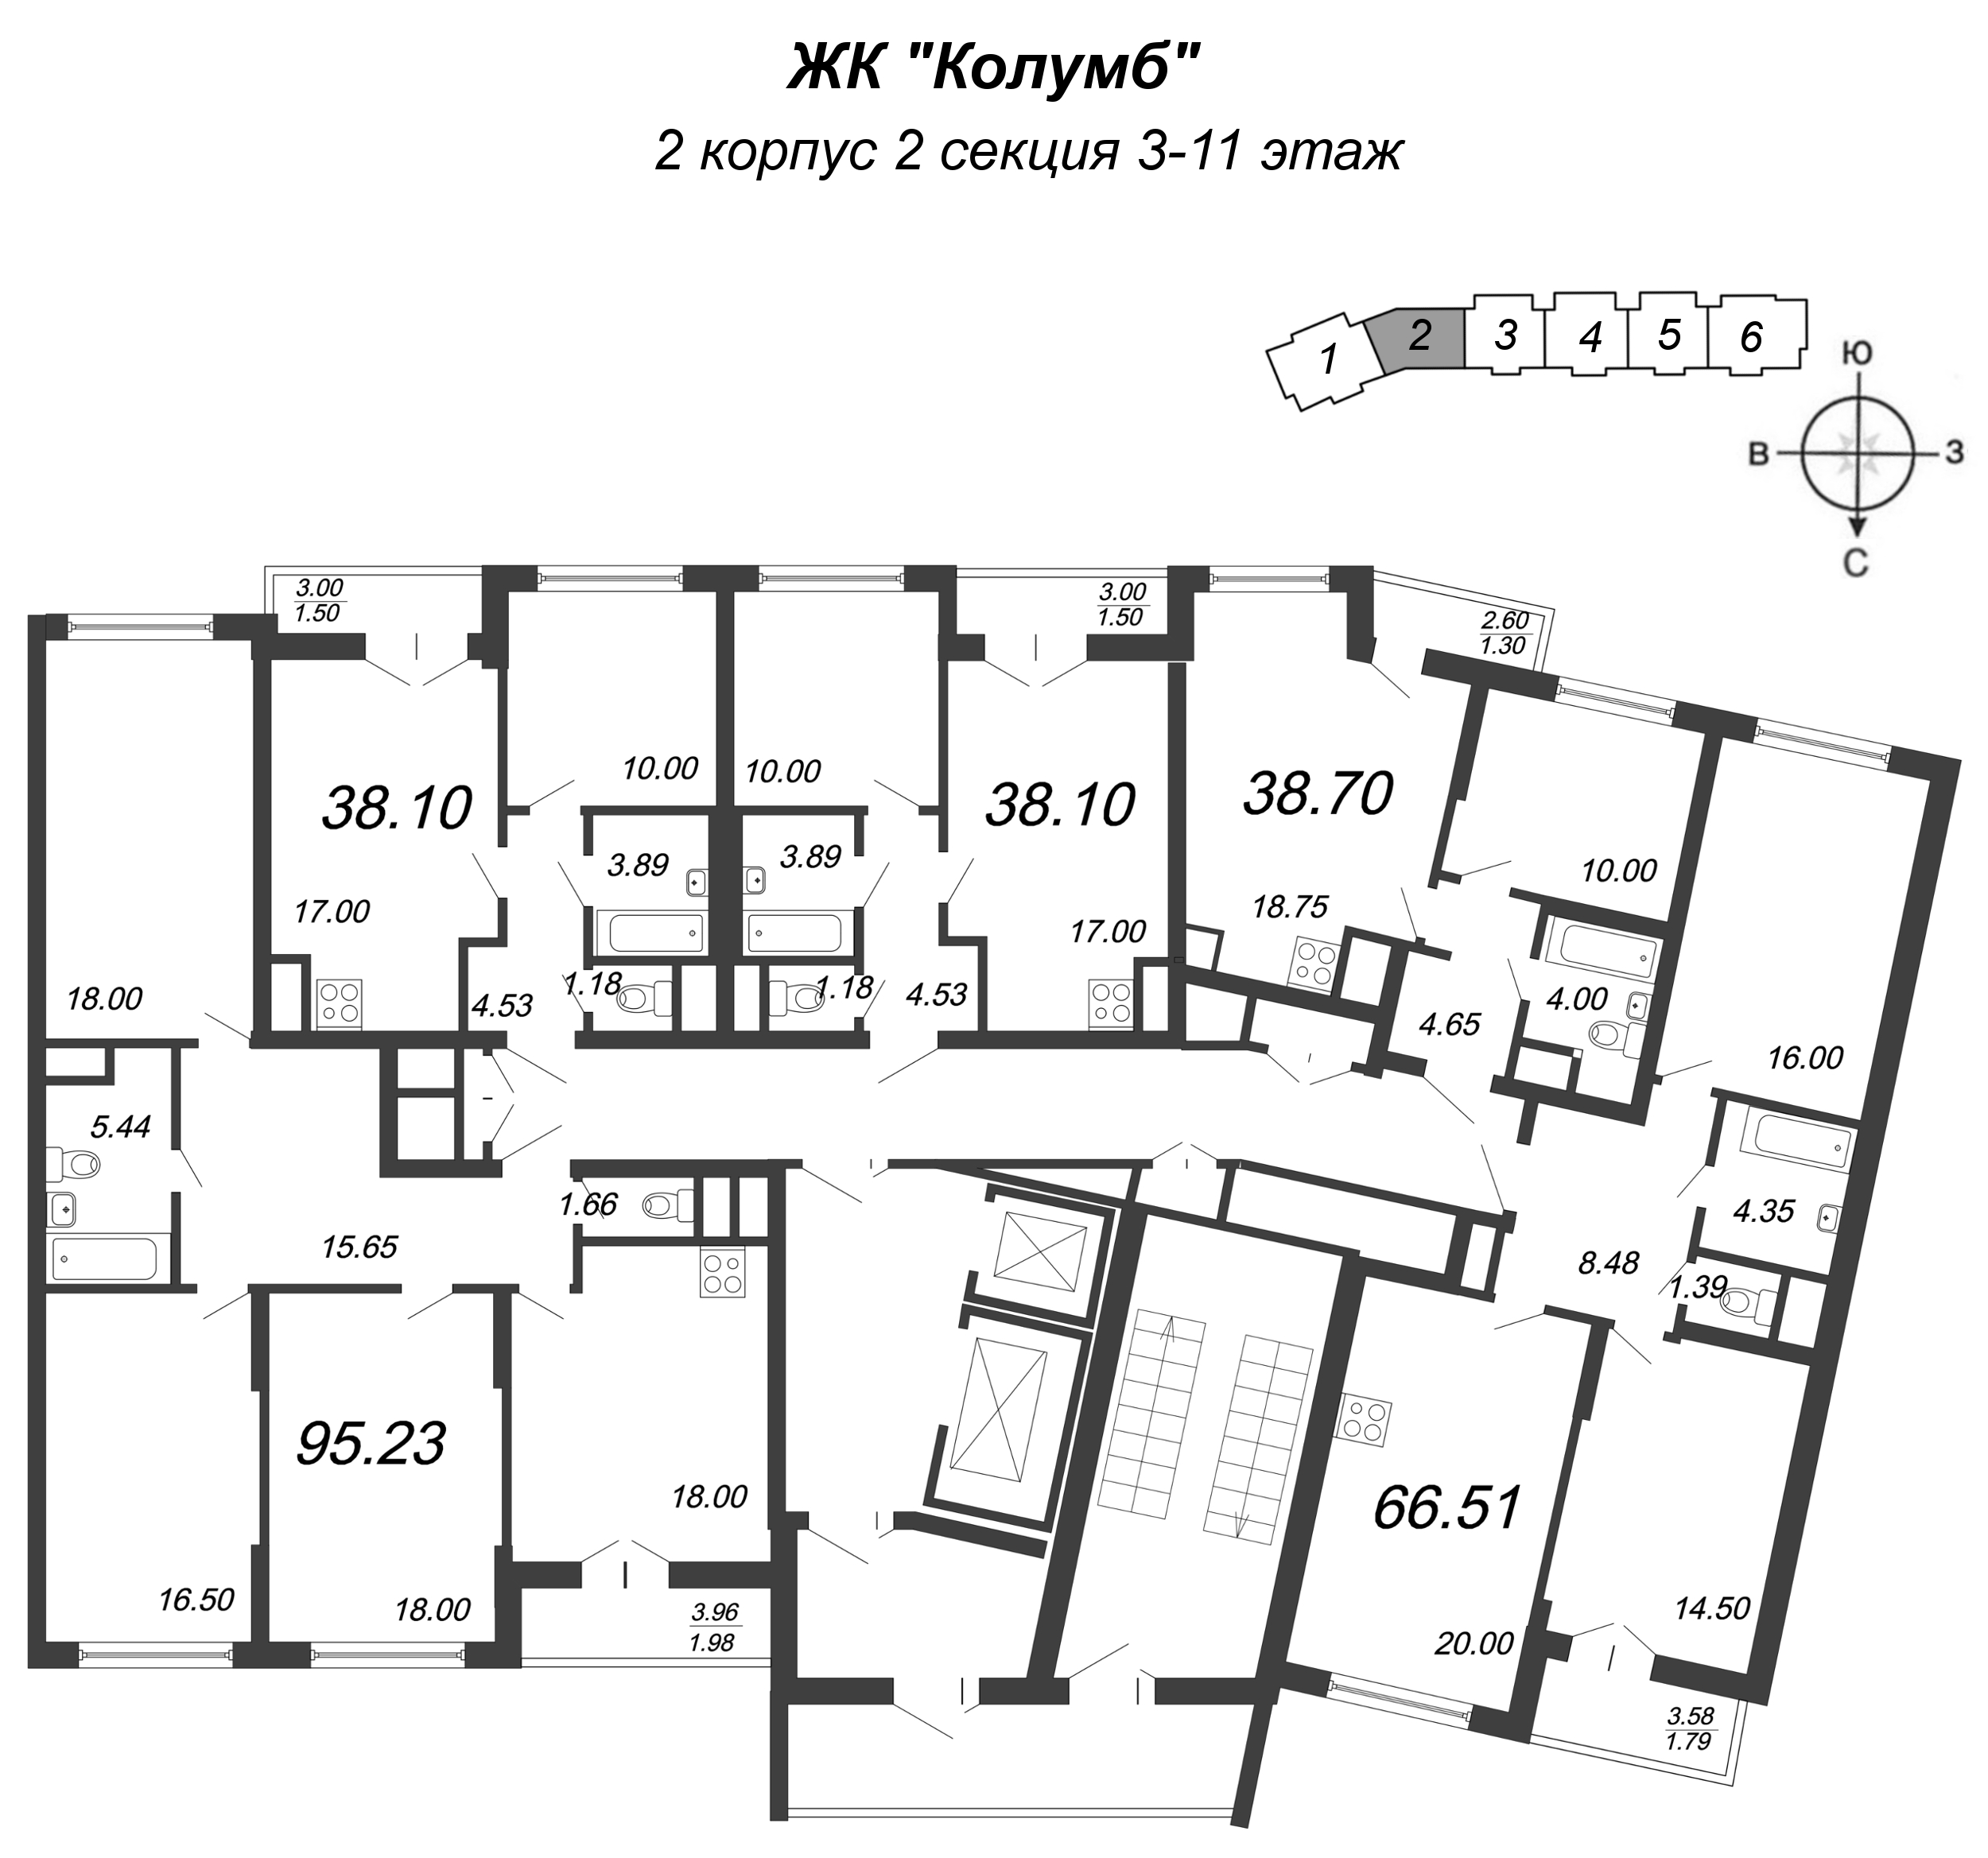 4-комнатная (Евро) квартира, 96.3 м² - планировка этажа